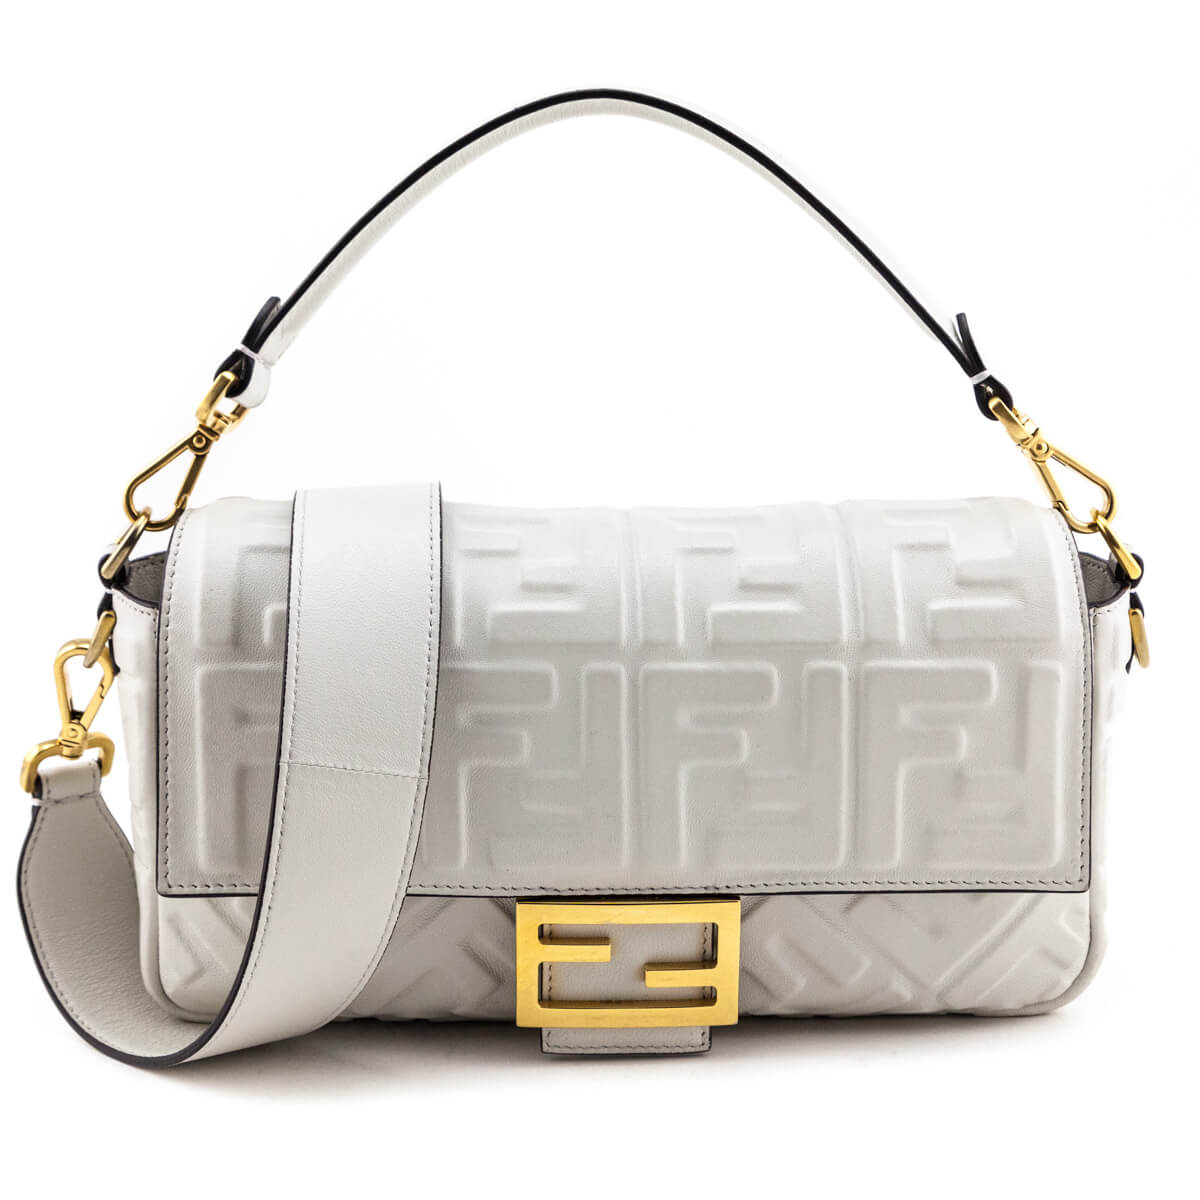 Fendi - Preloved Designer Handbags and Clothing - Love that Bag 